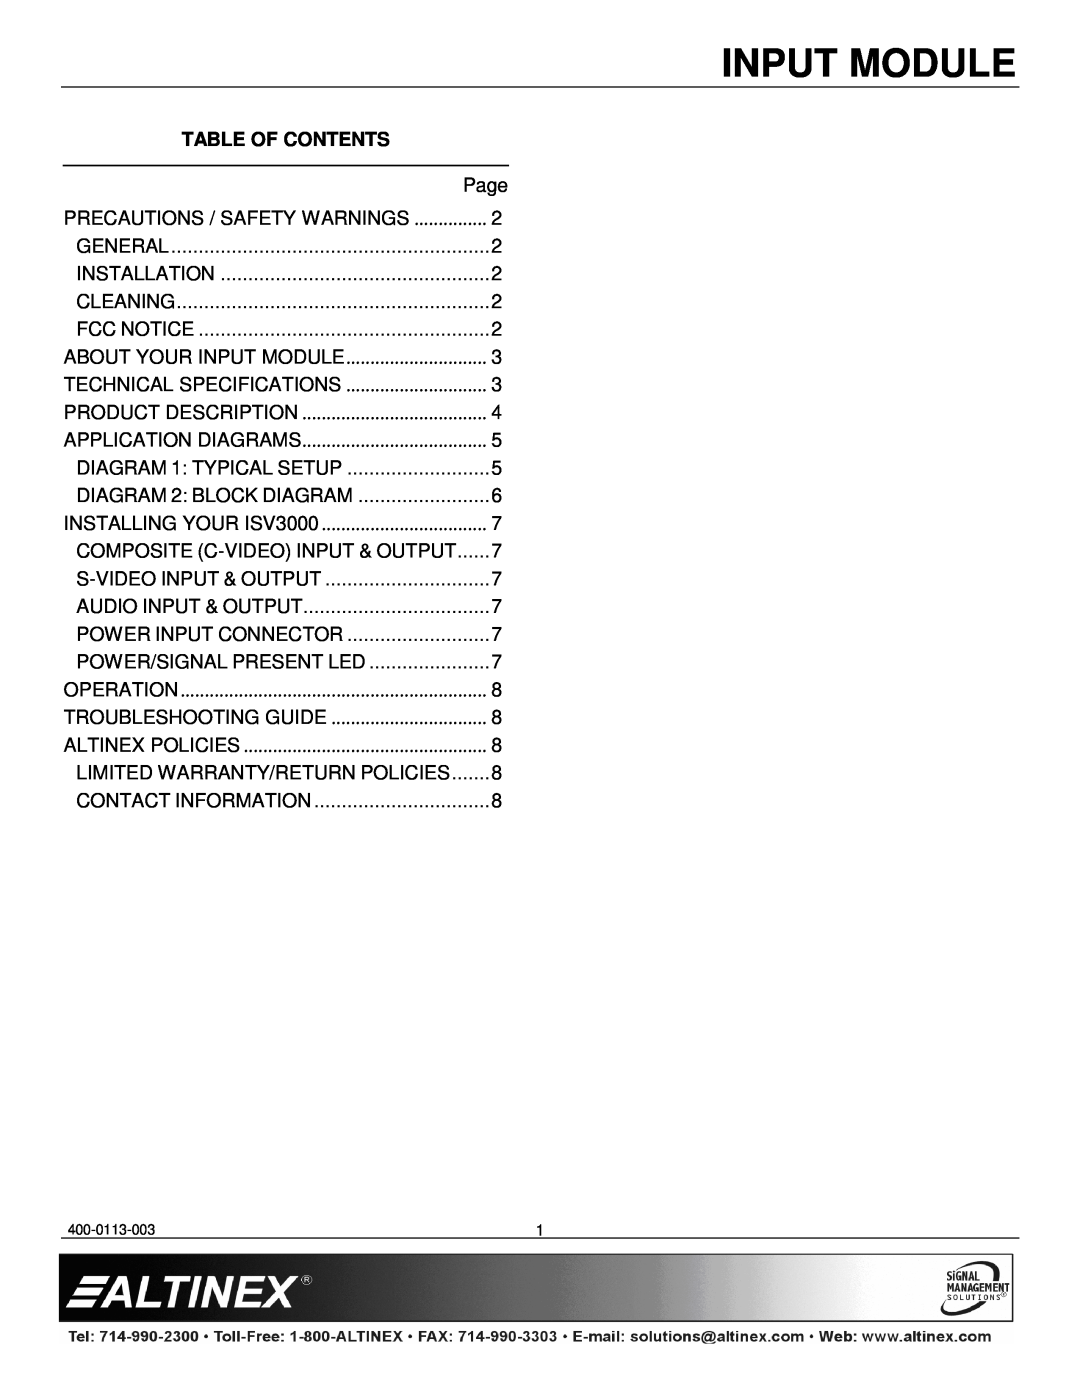 Altinex ISV3000-W manual Input Module, Page 